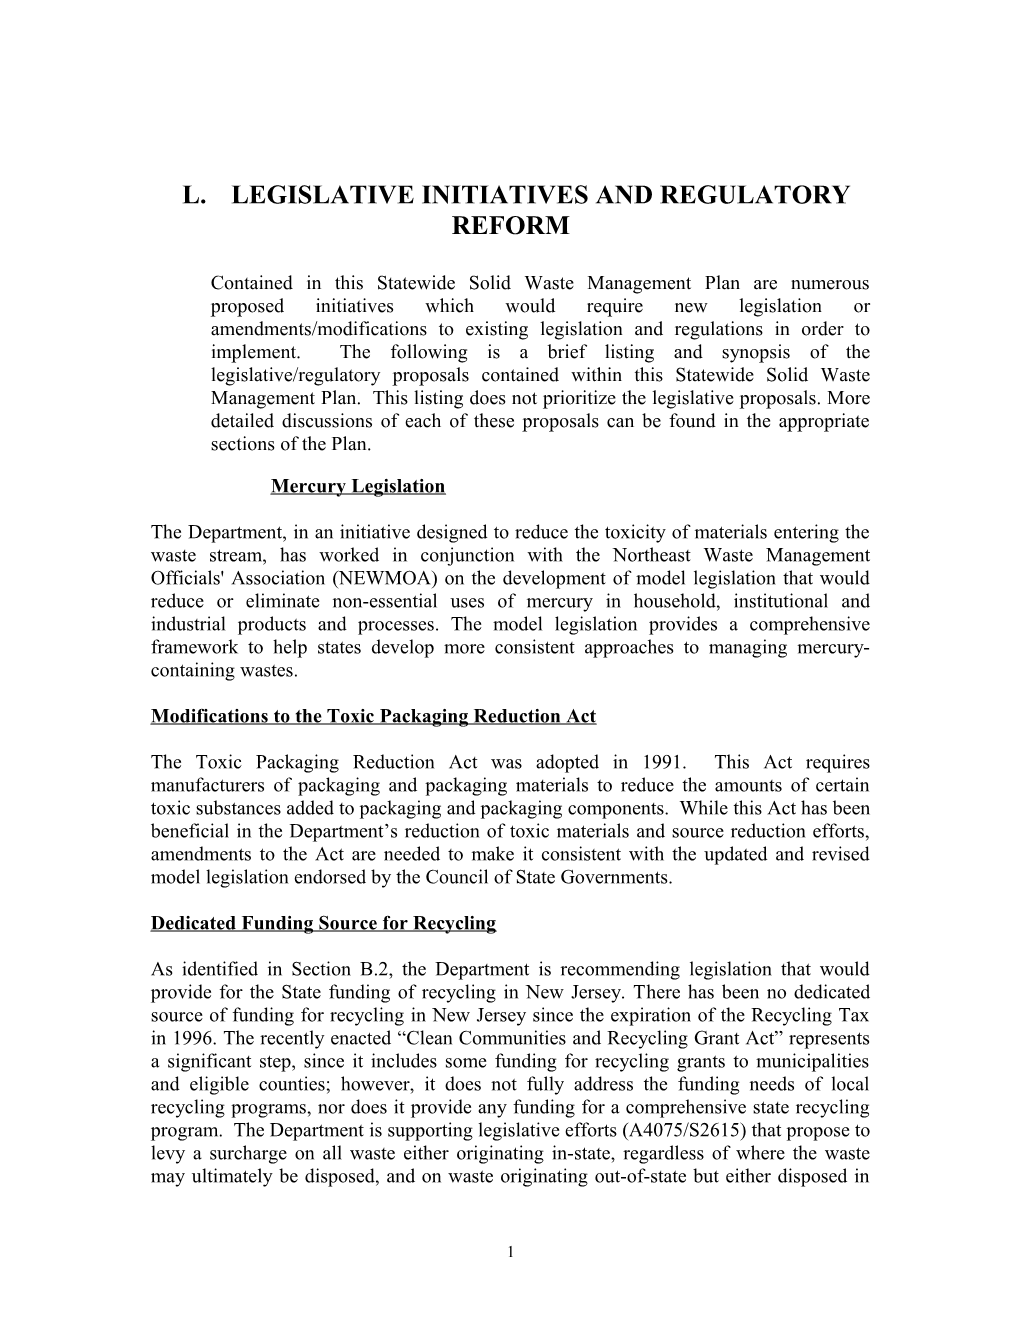 L. Legislative Initiatives and Regulatory Reform